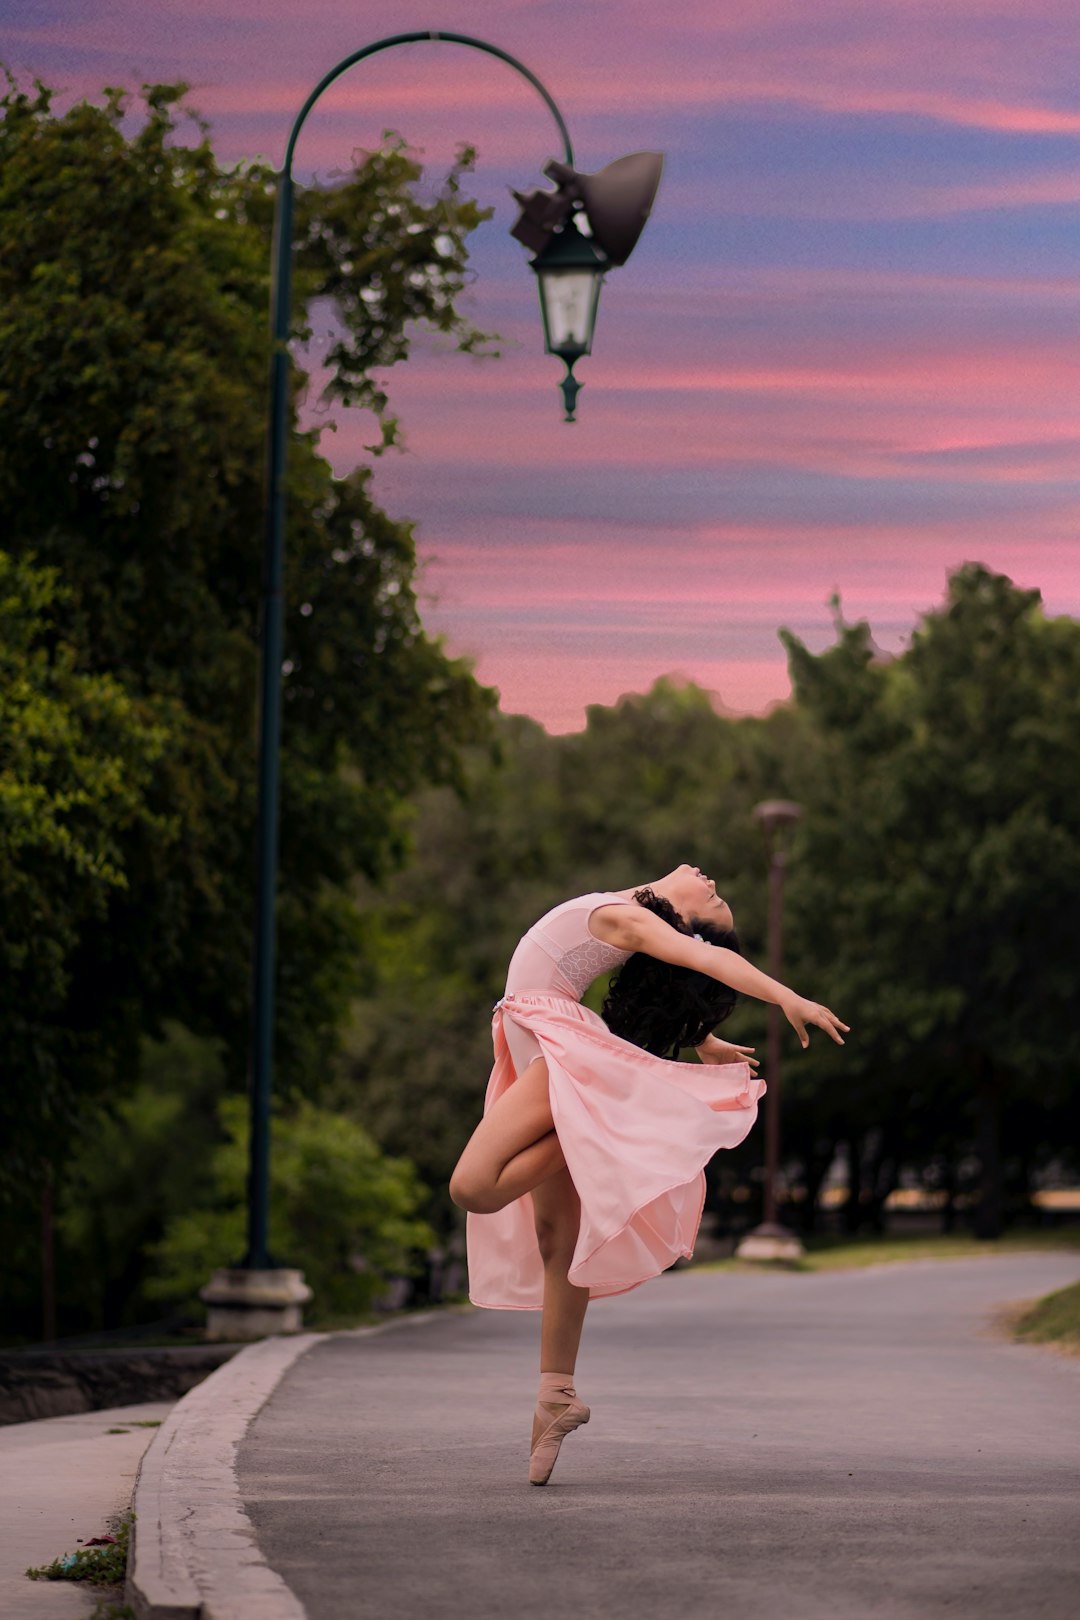 ballet-dancer-on-road-beside-street-lamp-photo-free-dance-image-on